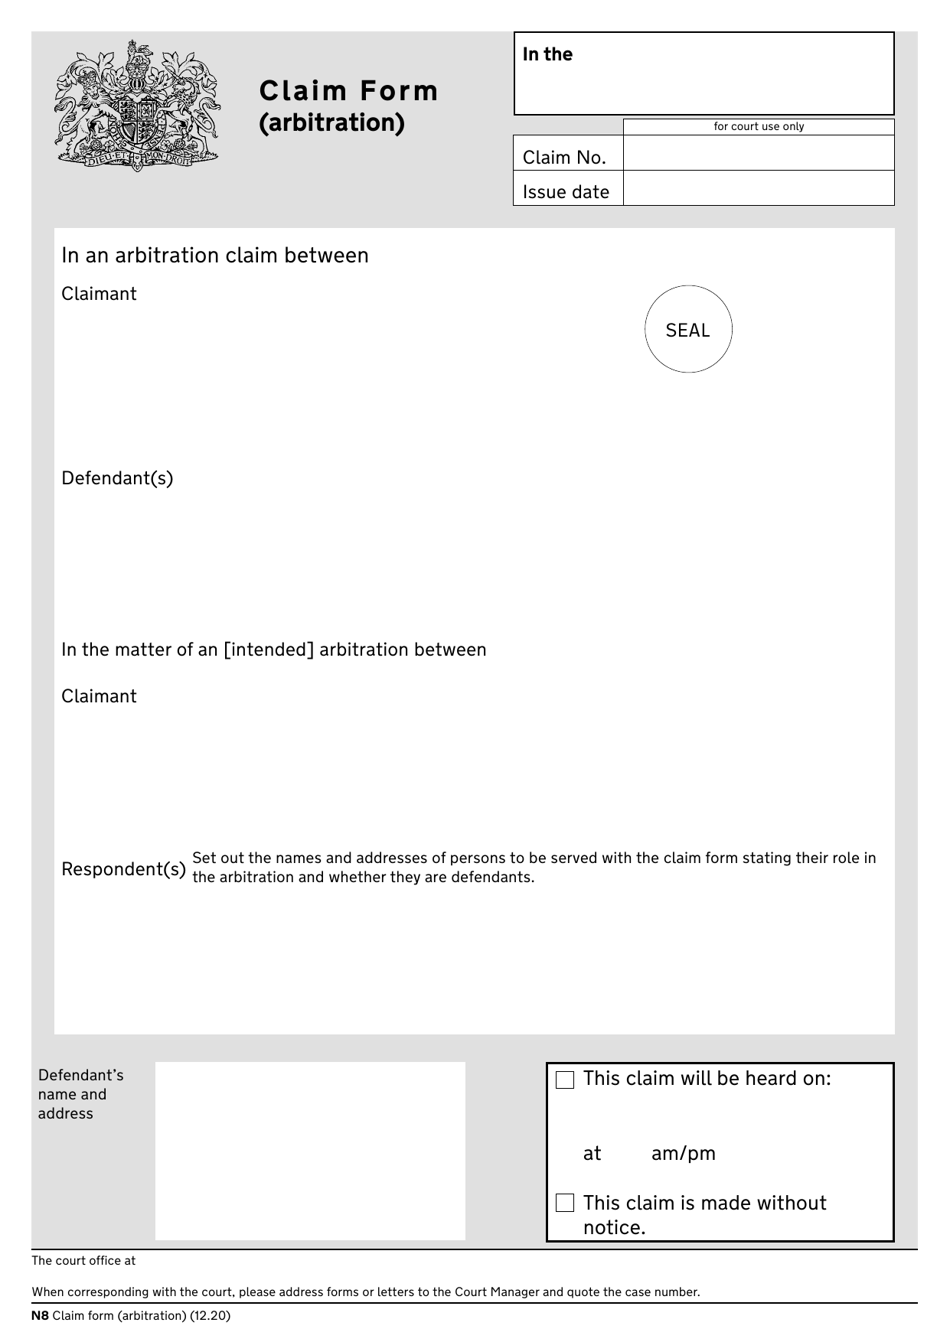 Form N8 Claim Form (Arbitration) - United Kingdom, Page 1